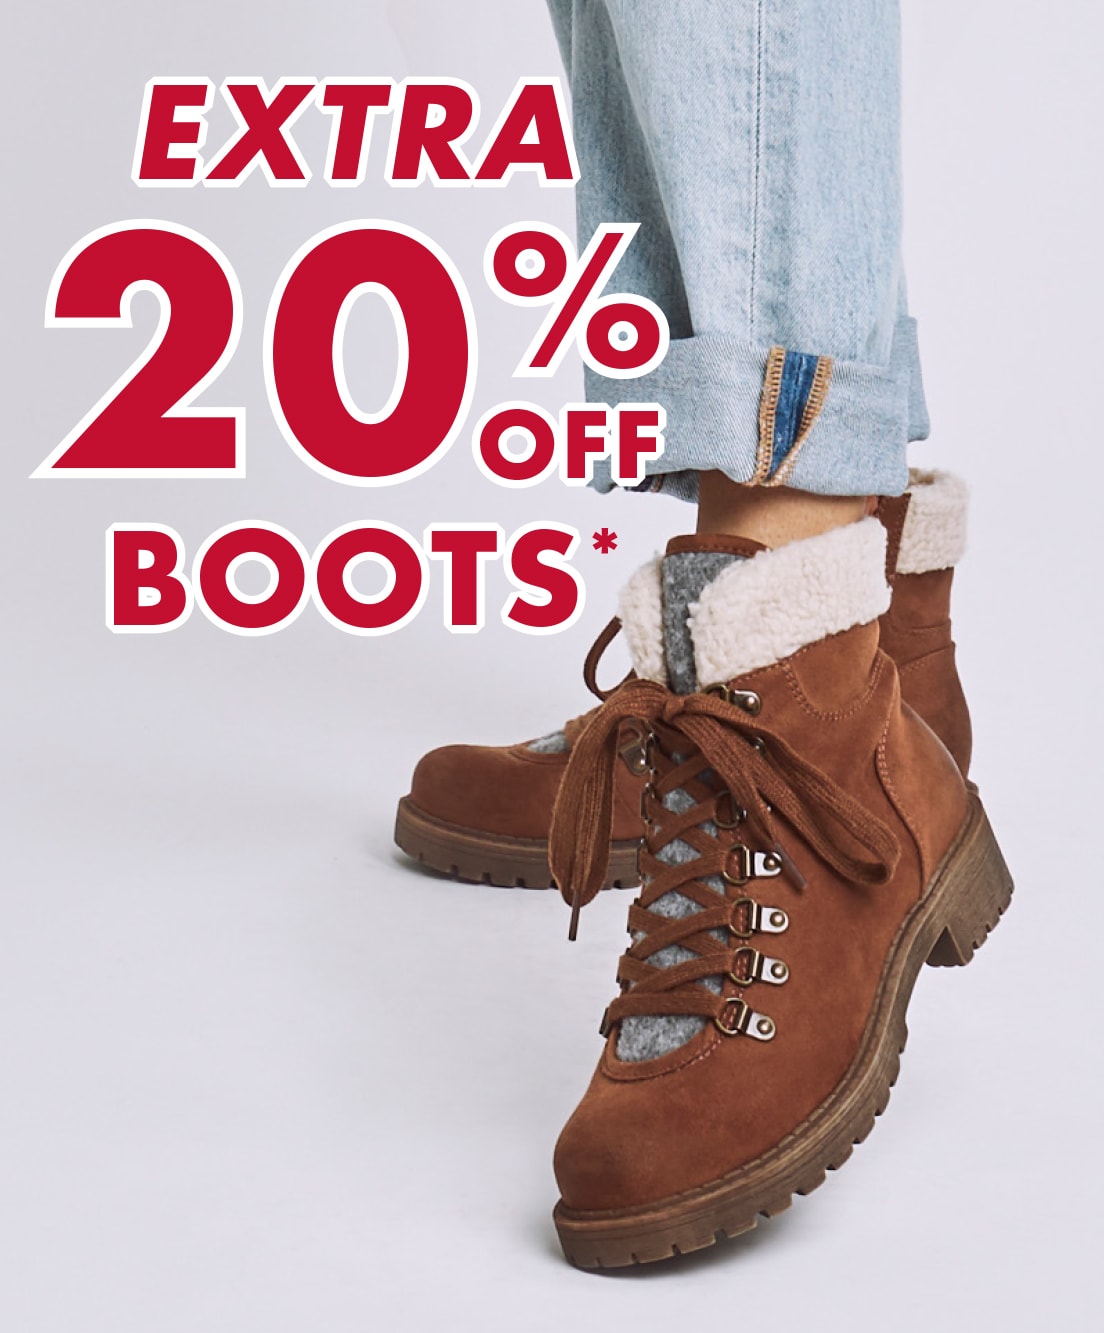 shop for boots online cheap